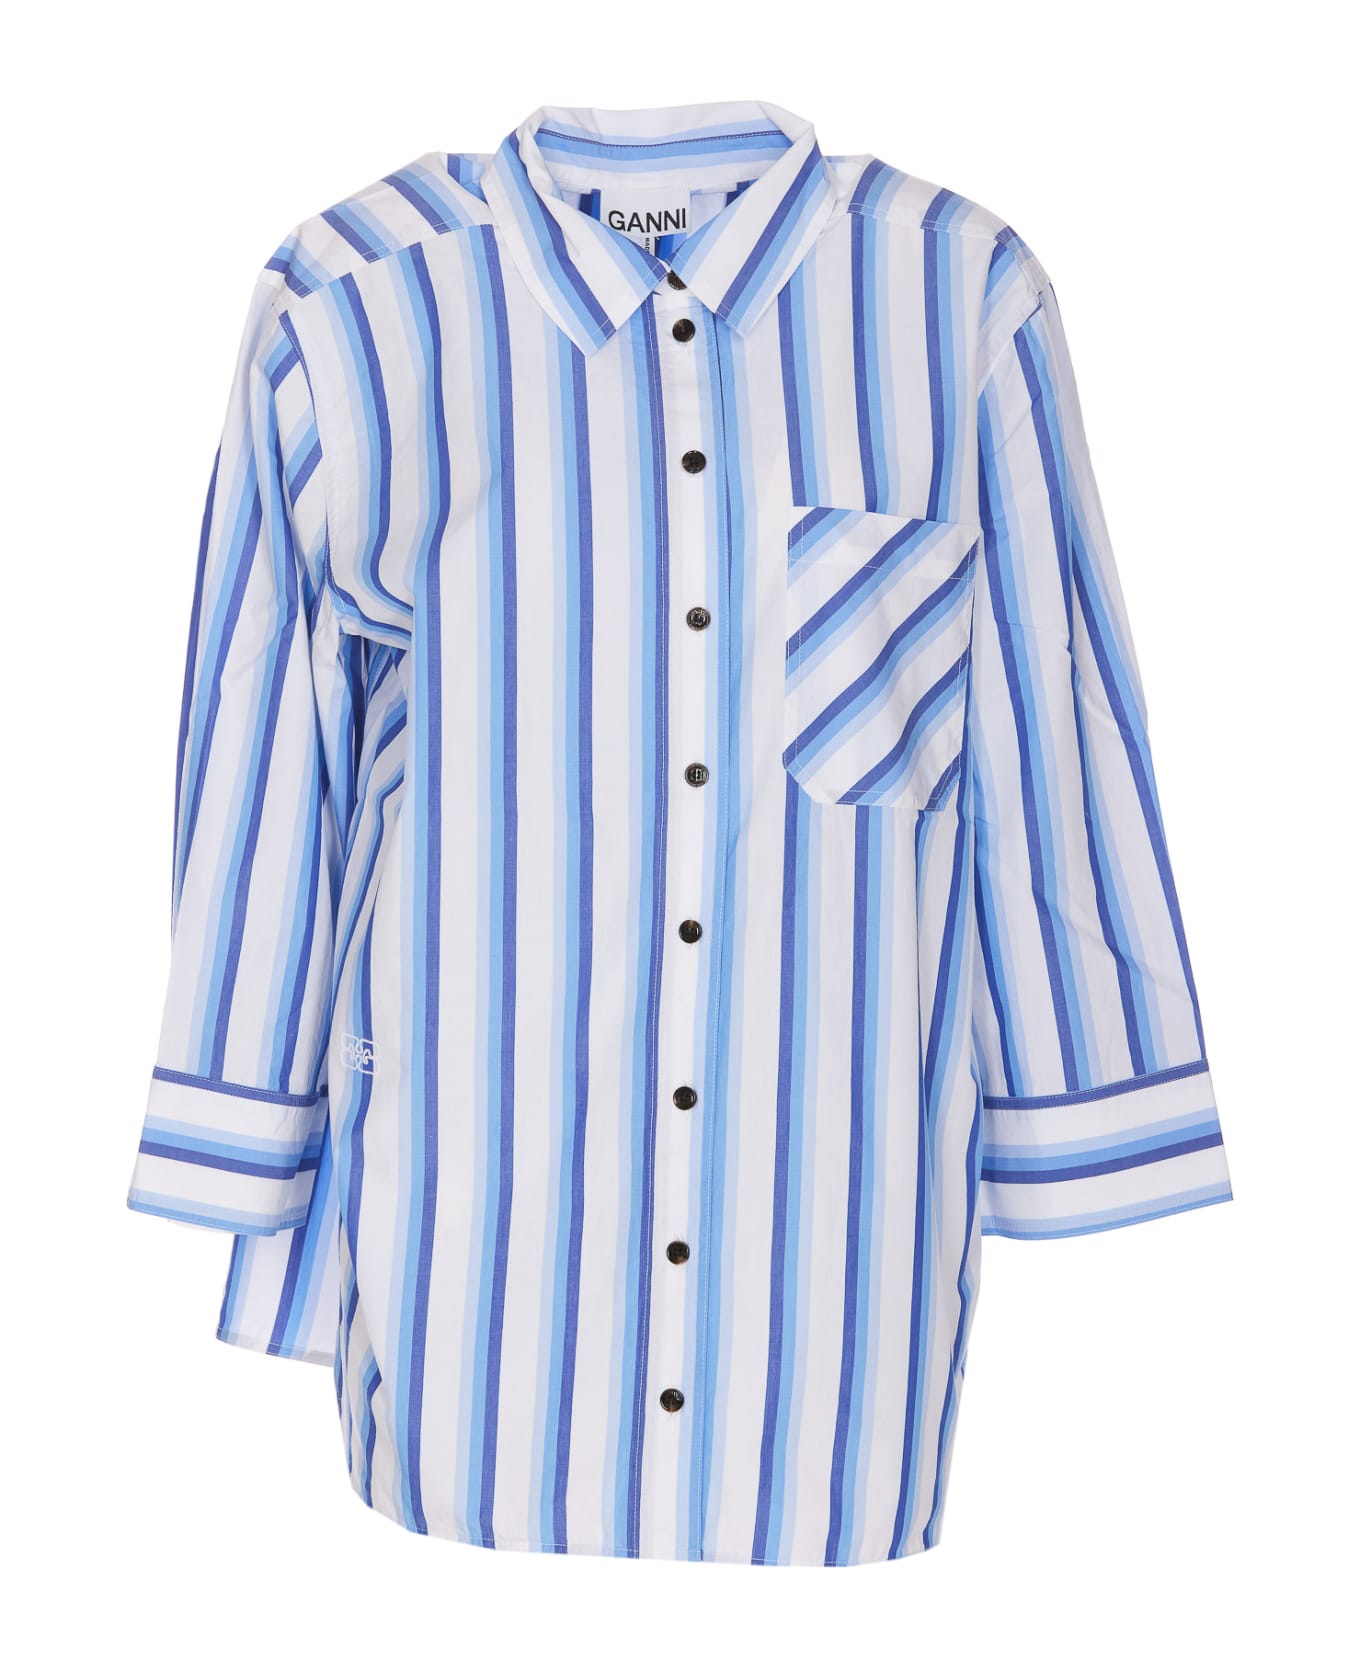 Ganni Striped Shirt - Silver Lake Blue シャツ